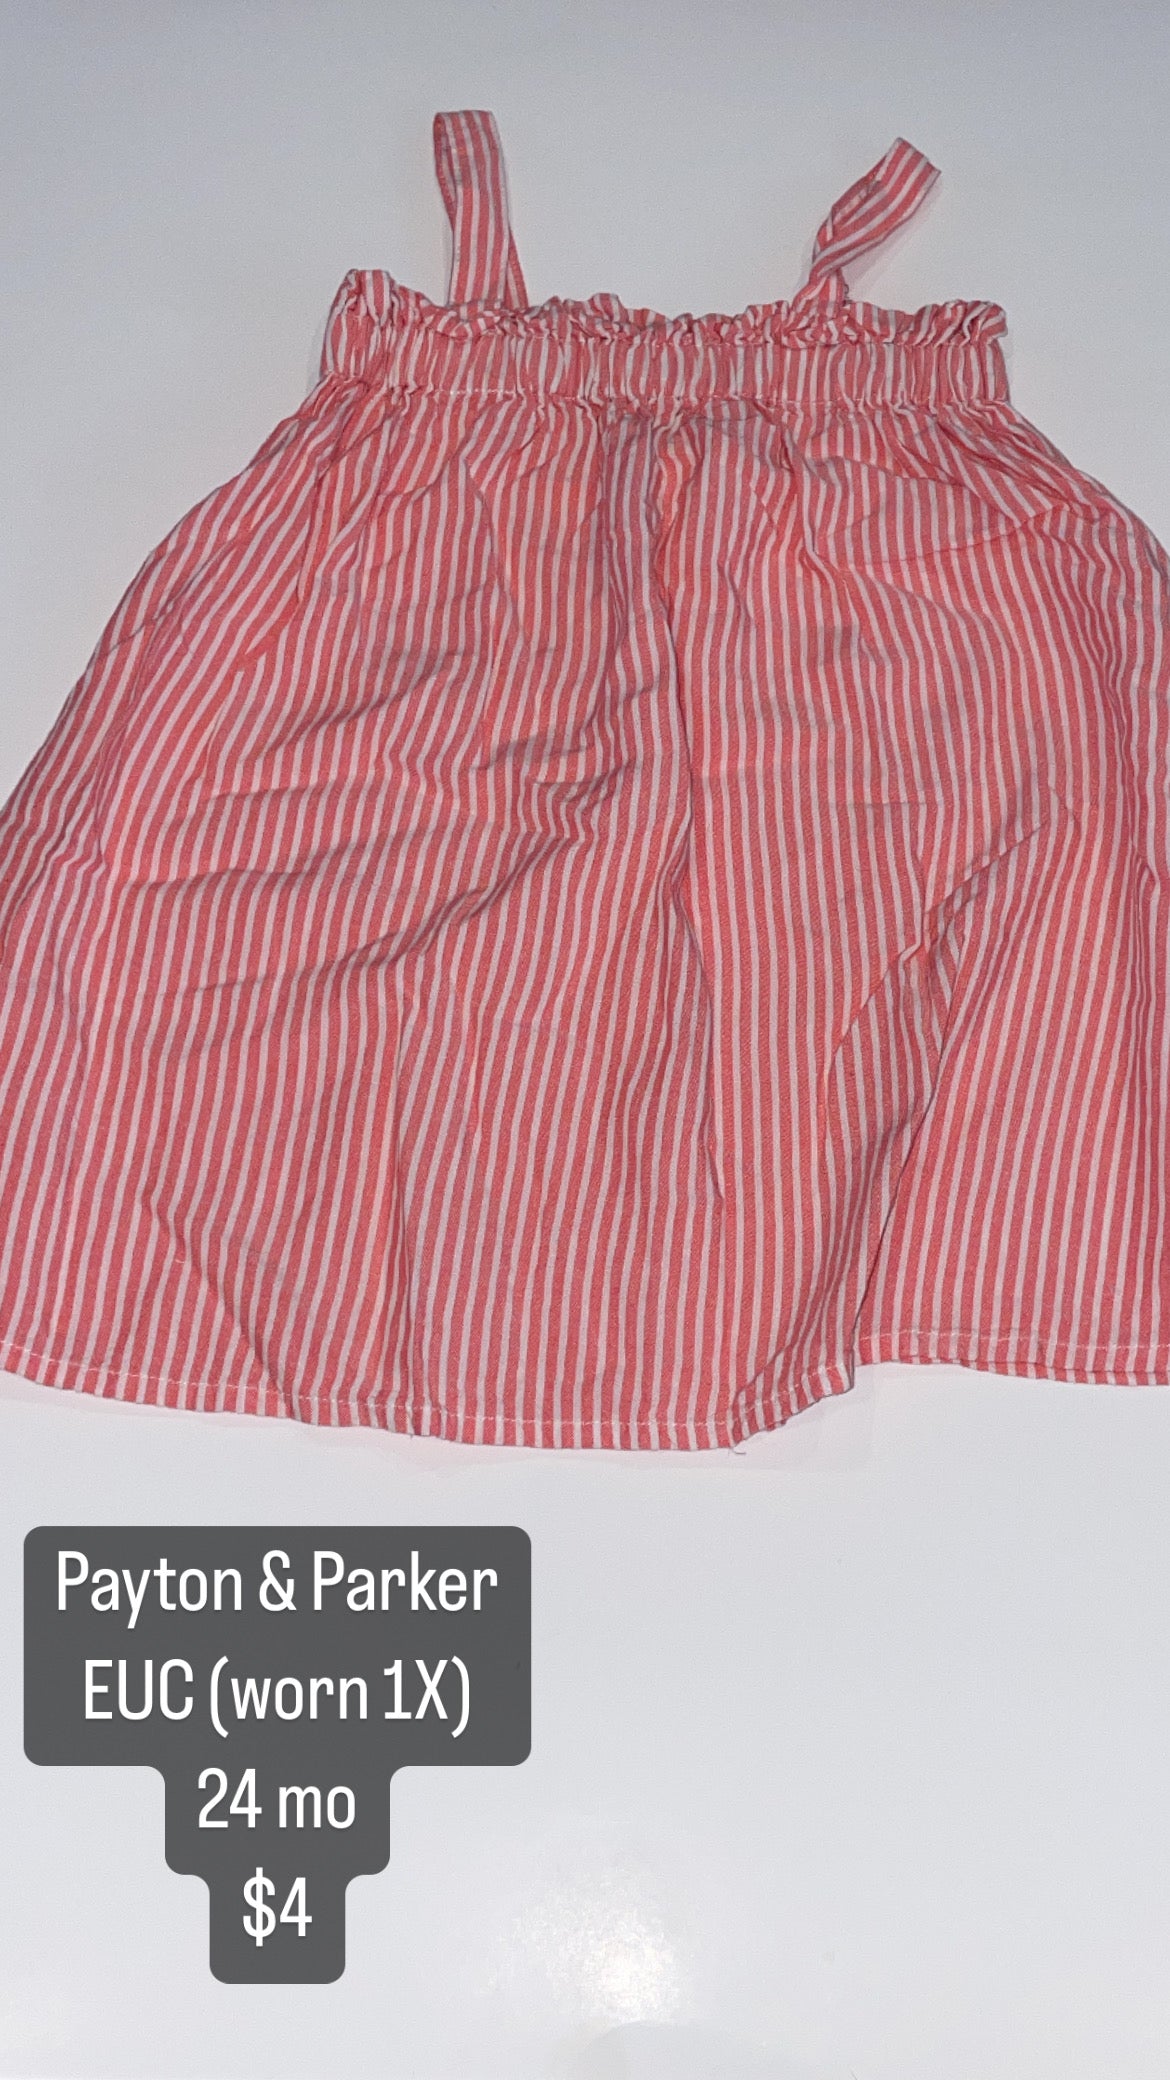 Peyton & Parker 24 mo dress